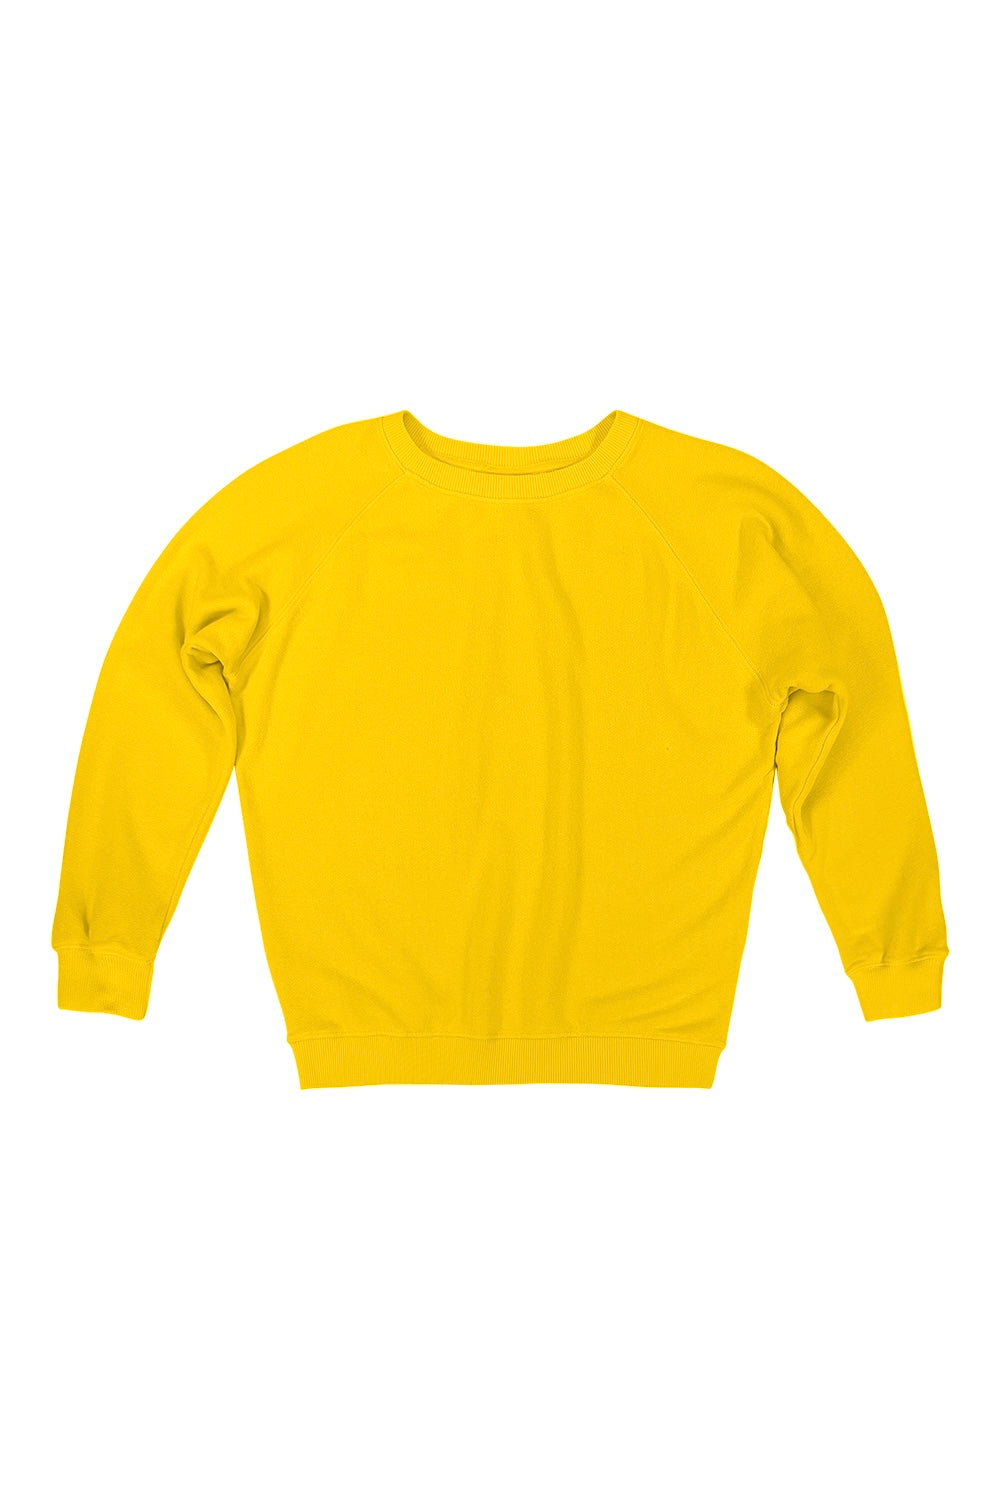 Bonfire Raglan Sweatshirt | Jungmaven Hemp Clothing & Accessories / Color: Sunshine Yellow